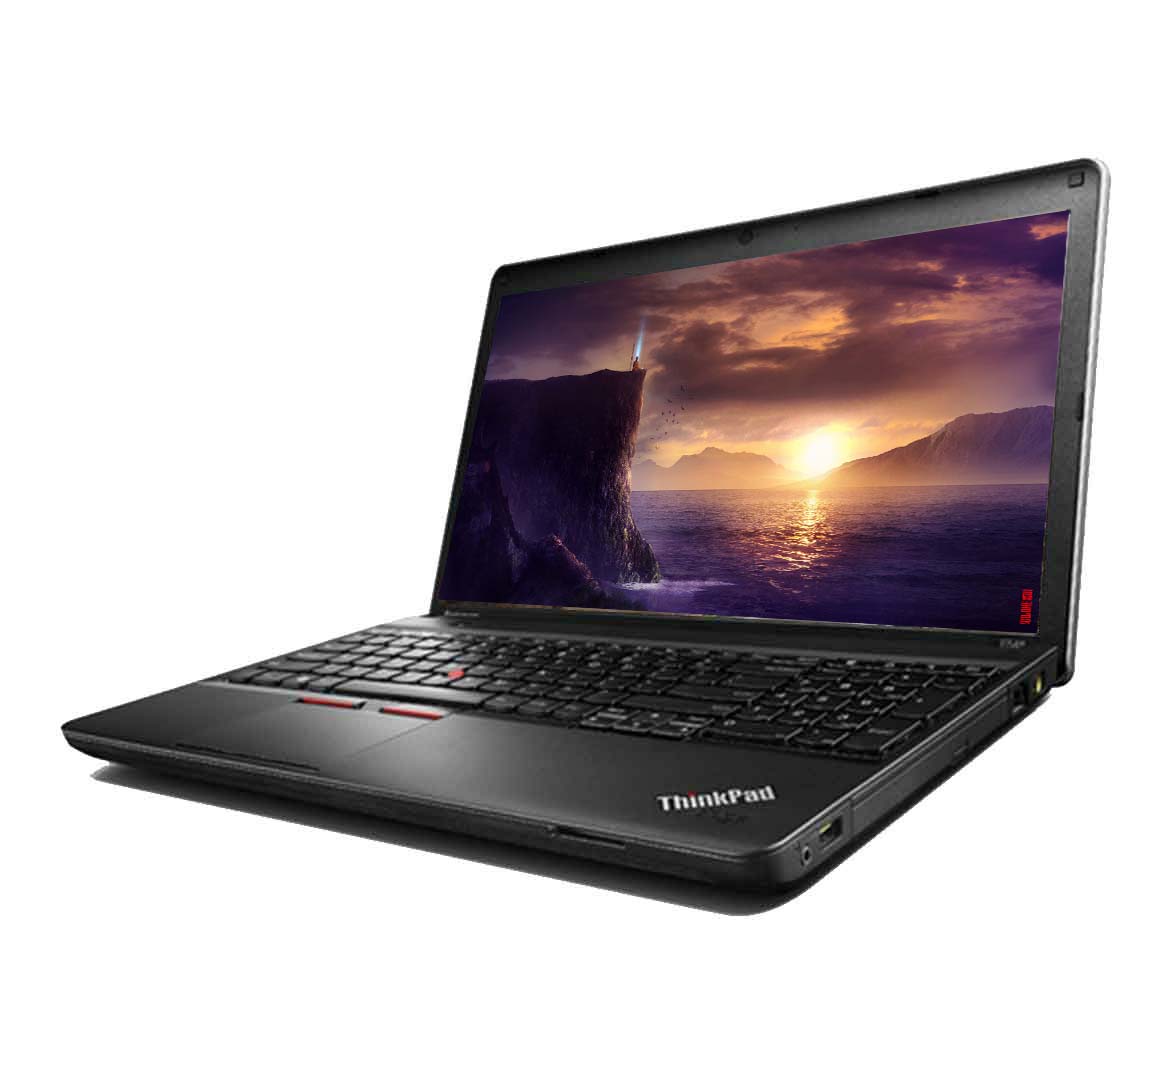 Lenovo ThinkPad Edge E545, AMD A6 CPU, 4GB RAM, 320GB HDD, AMD FIREPRO M3900, 15 inch Display, Windows 10 Pro, Refurbished Laptop